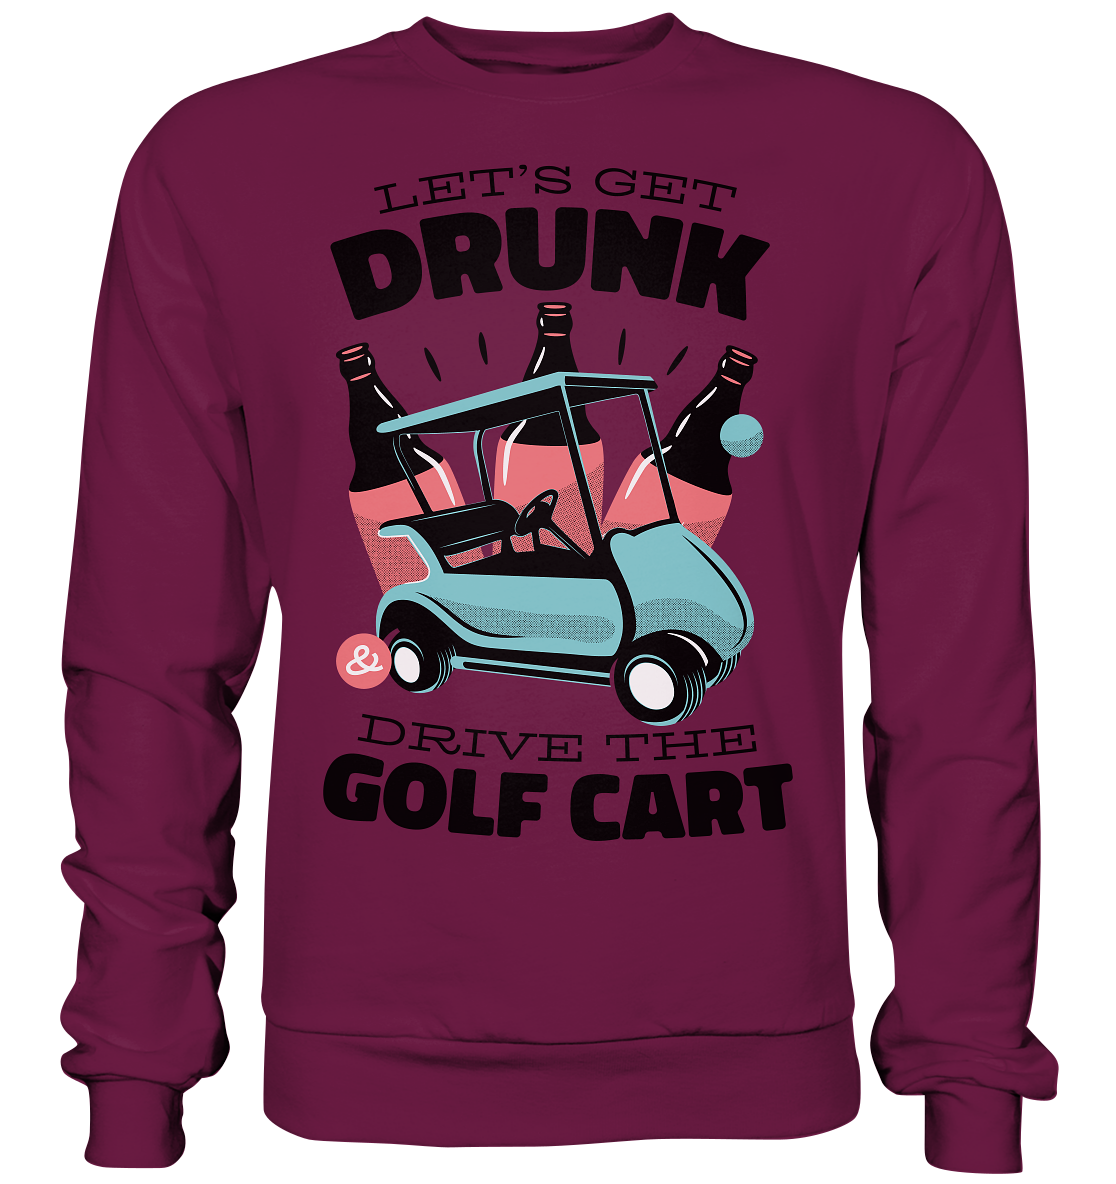 Let's get drunk drive the golf cart - Premium Sweatshirt